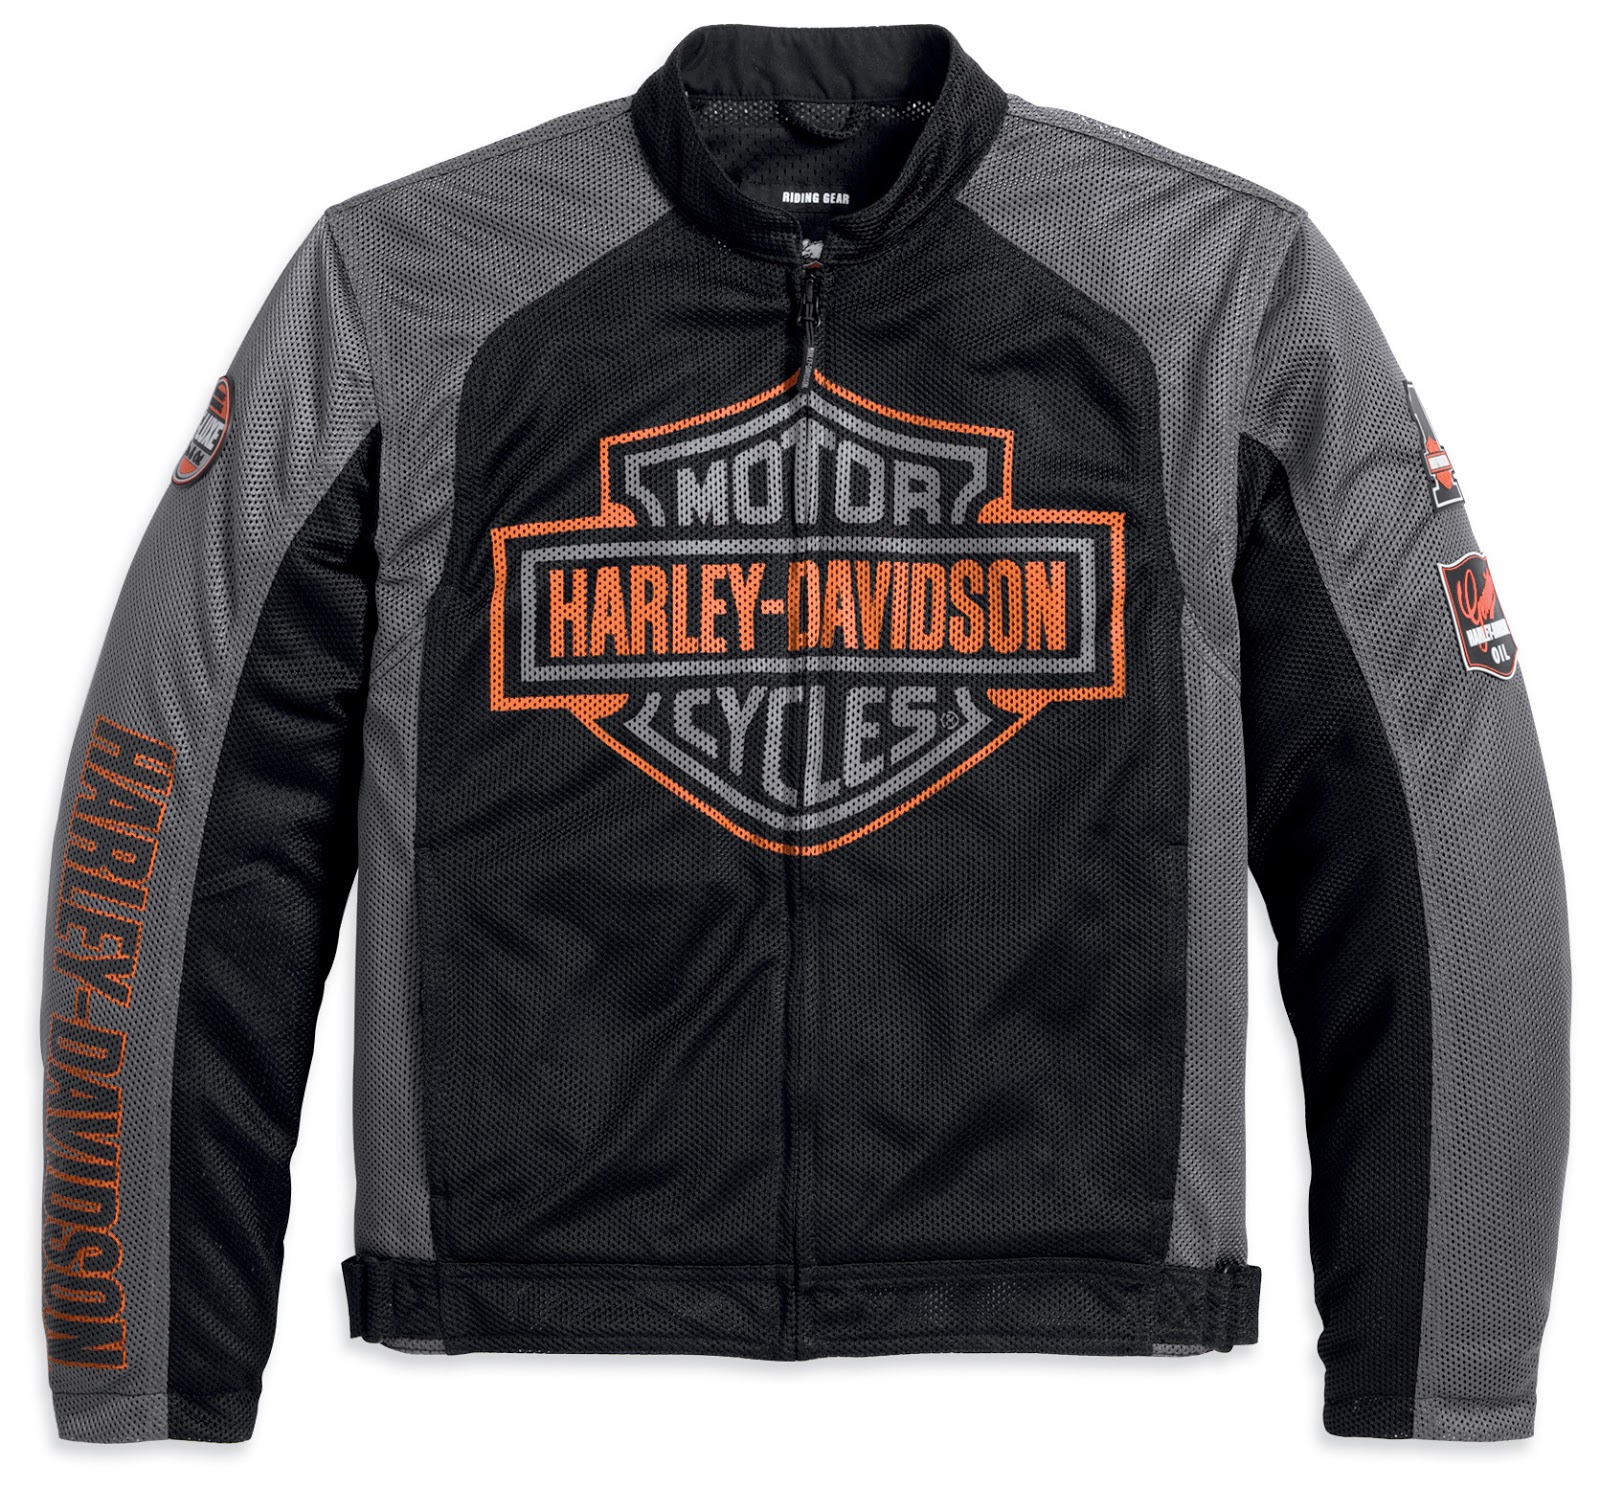 Harley Davidson Jacket : Men's Victory Lane Leather Jacket - Tall